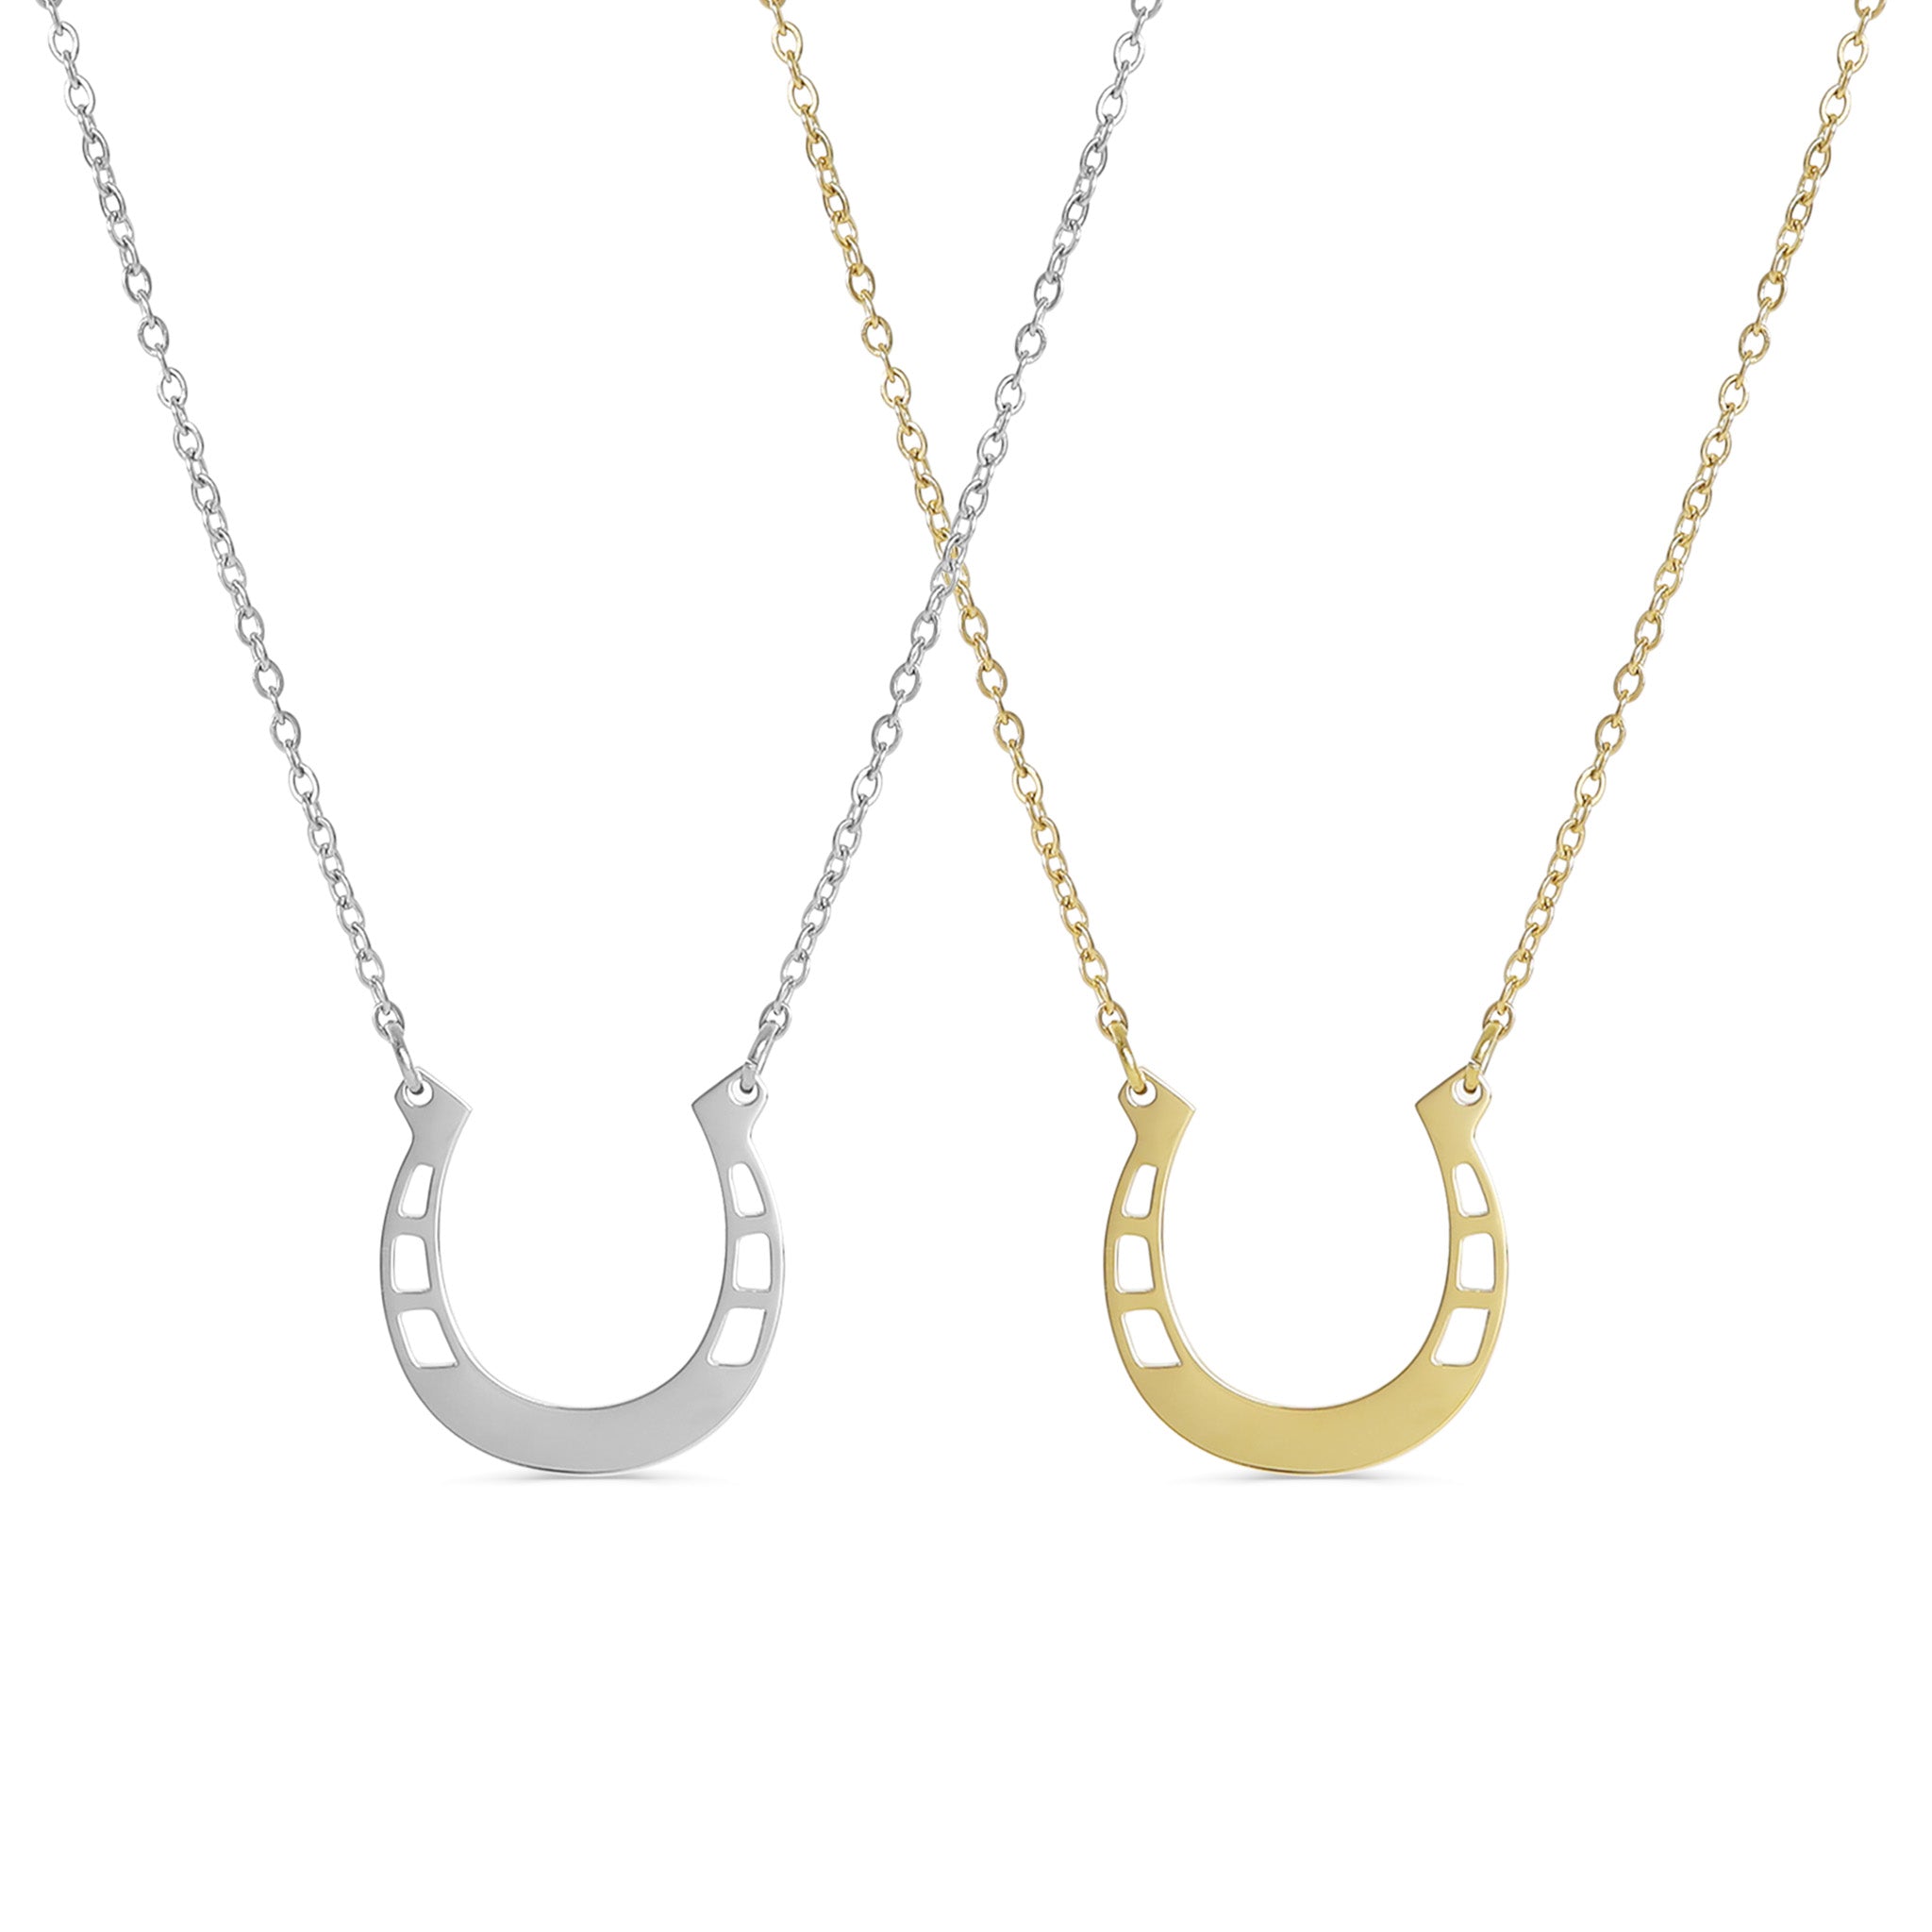 14K YELLOW GOLD PAVE HORSESHOE NECKLACE | Patty Q's Jewelry Inc